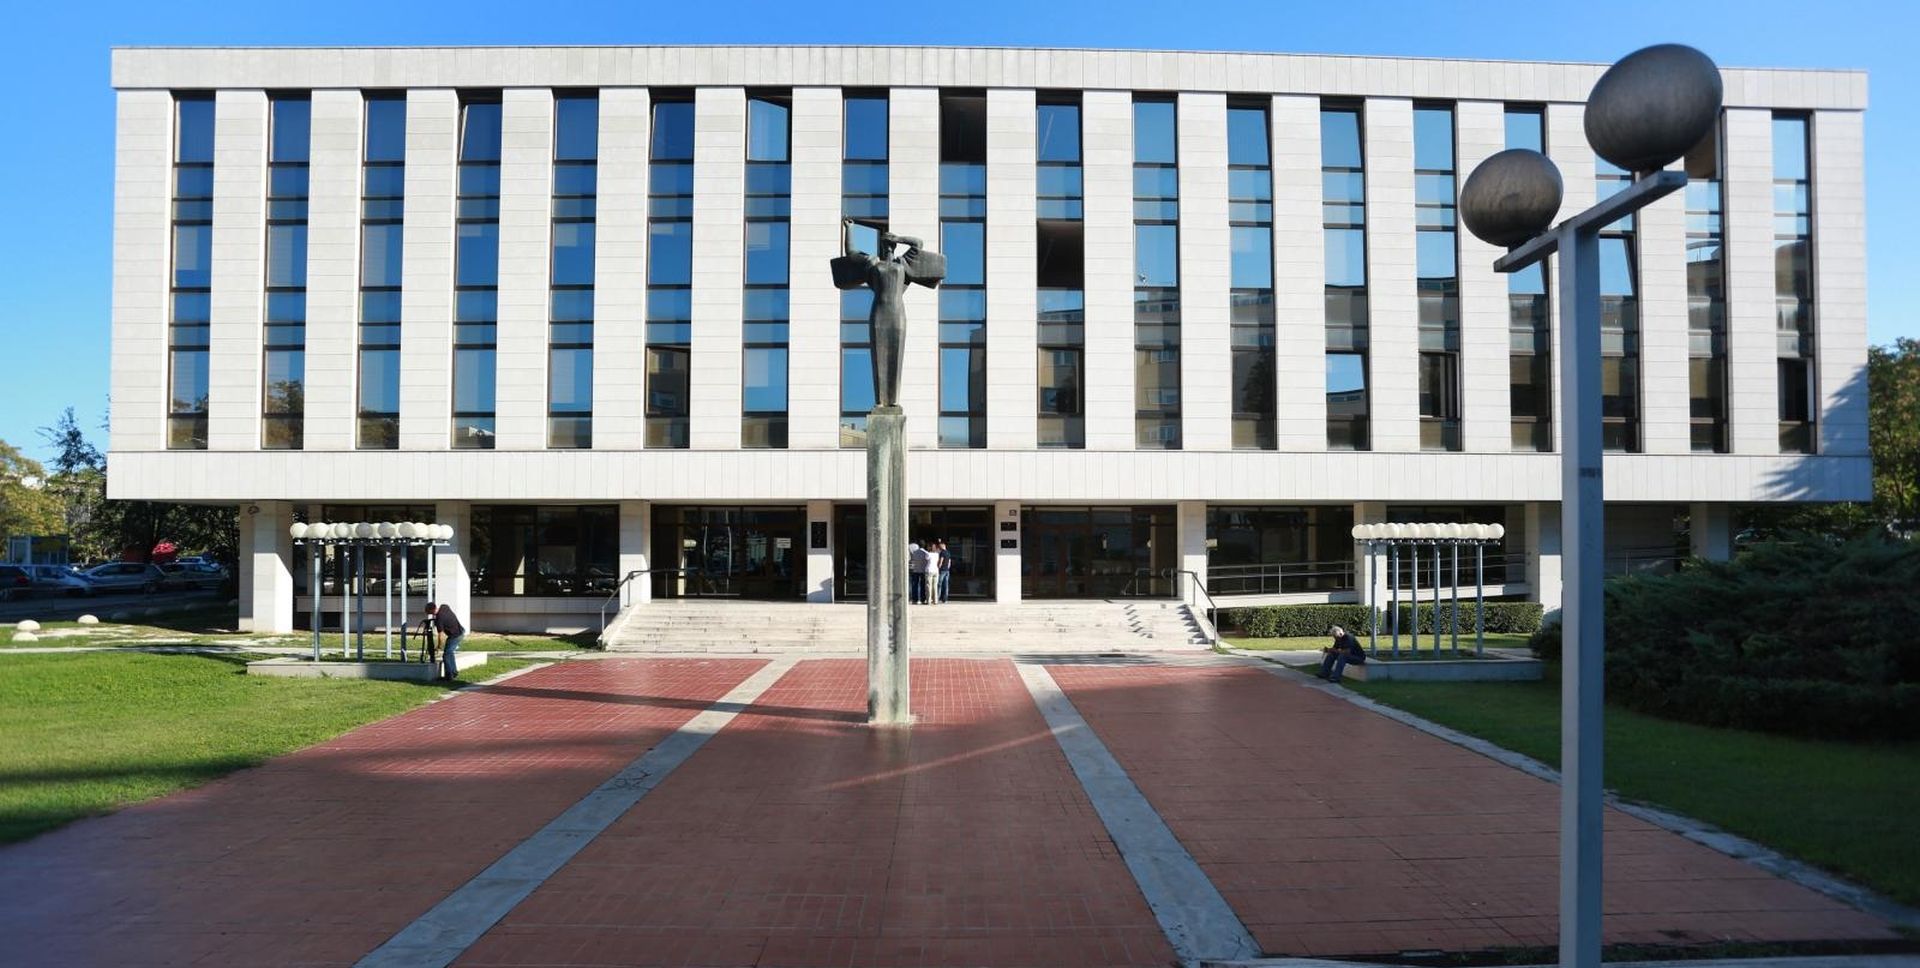 20.09.2016., Split - Zgrada Zupanijskog suda. 
Photo: Miranda Cikotic/PIXSELL